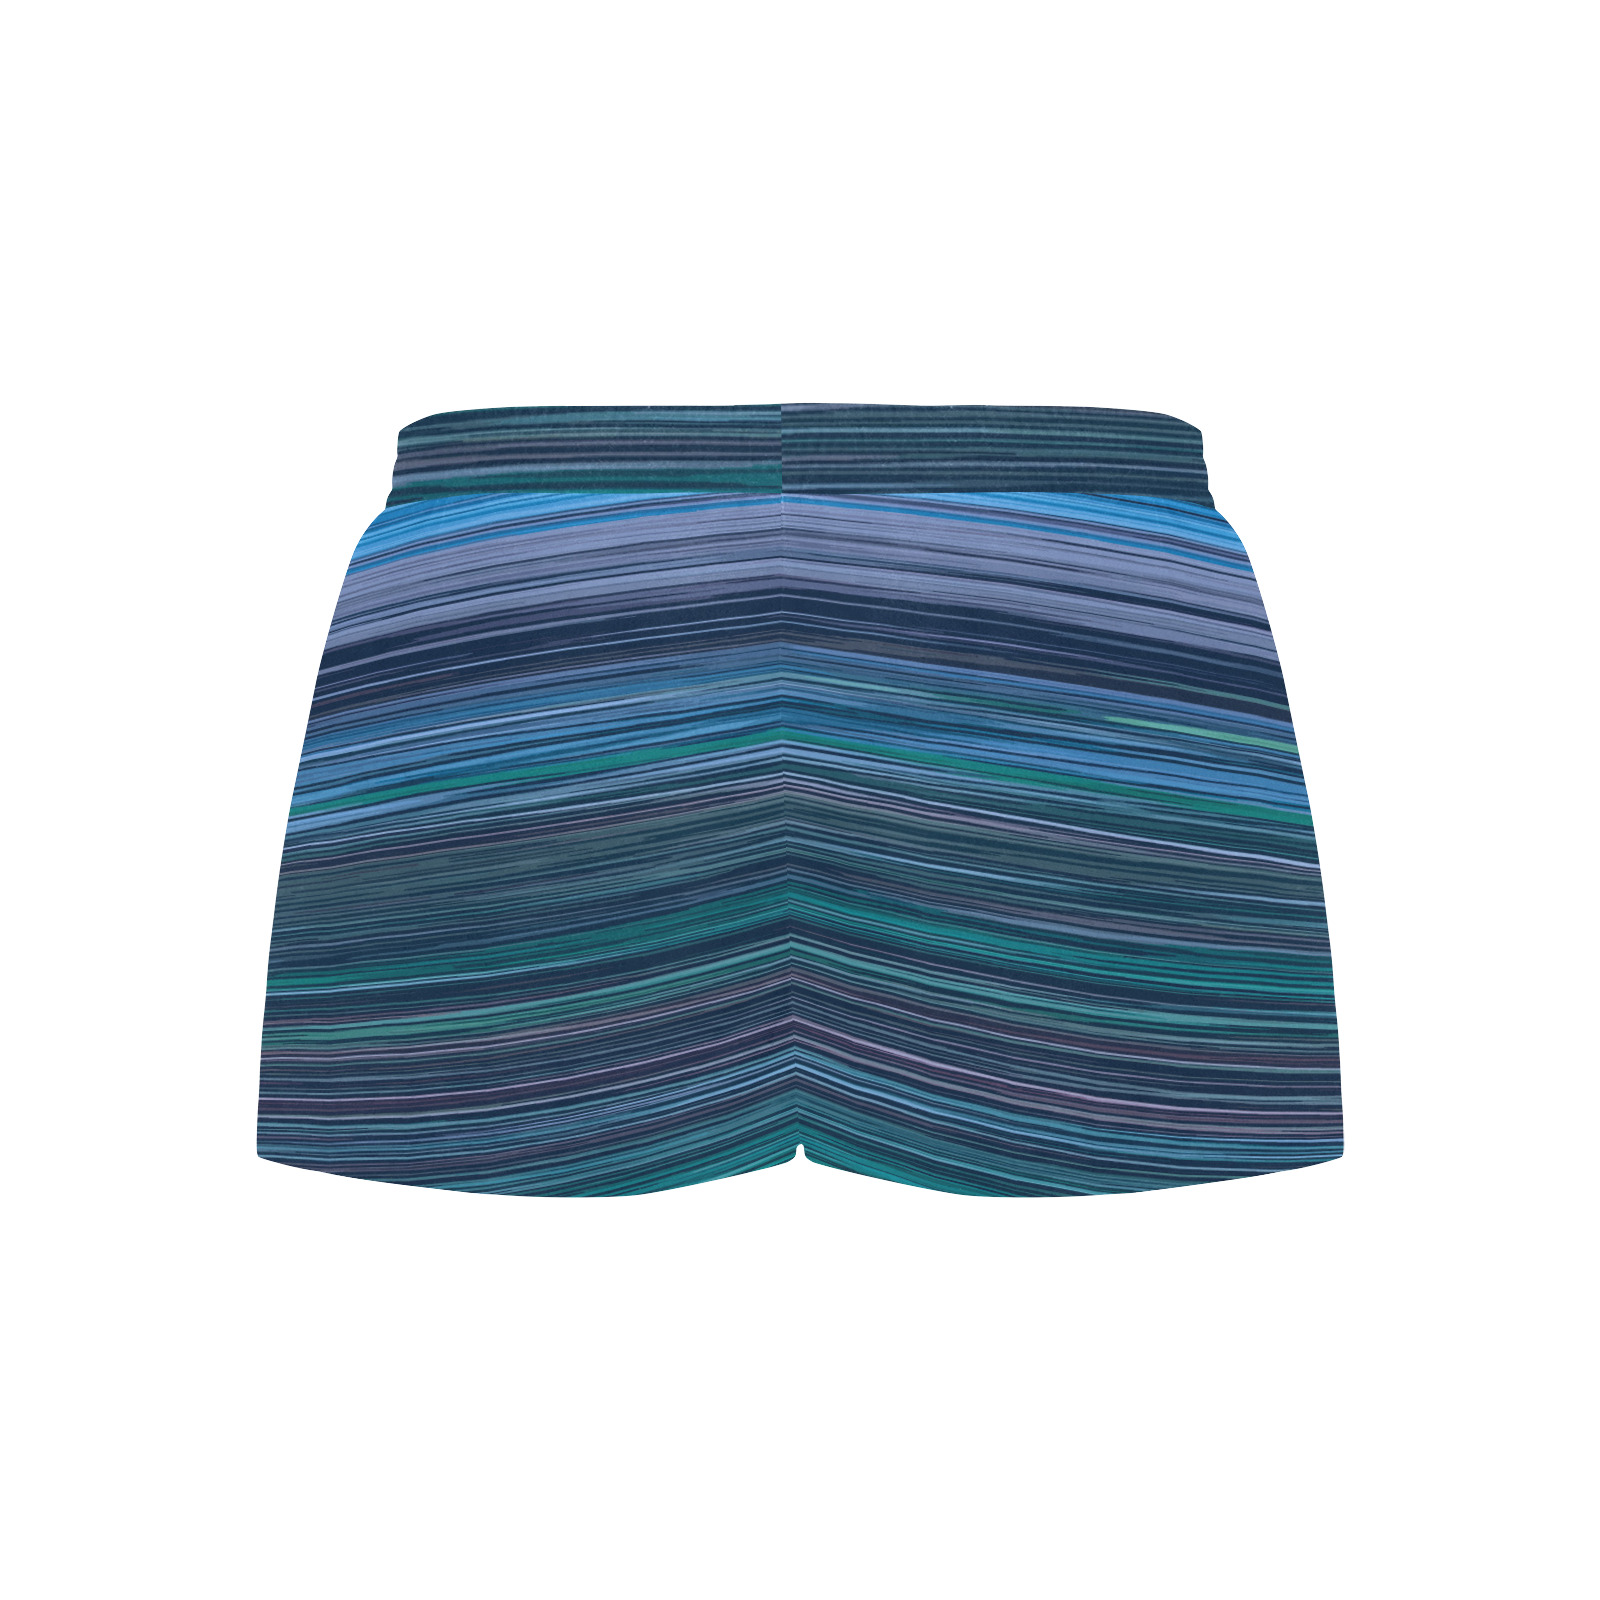 Abstract Blue Horizontal Stripes Women's Pajama Shorts